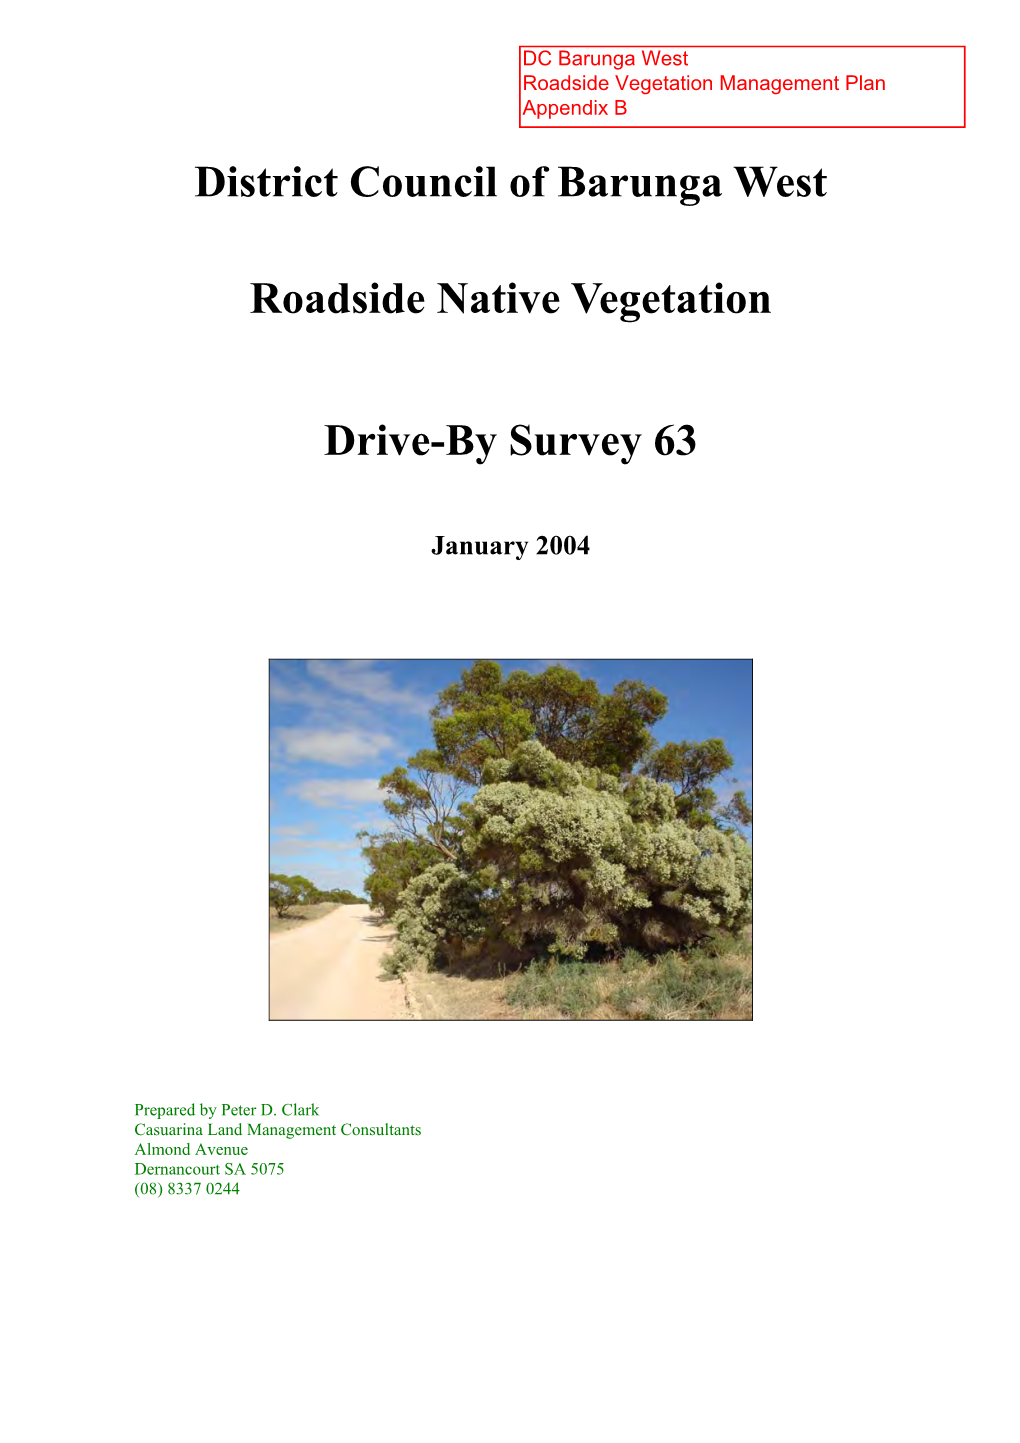 Roadside Vegetation Survey Report